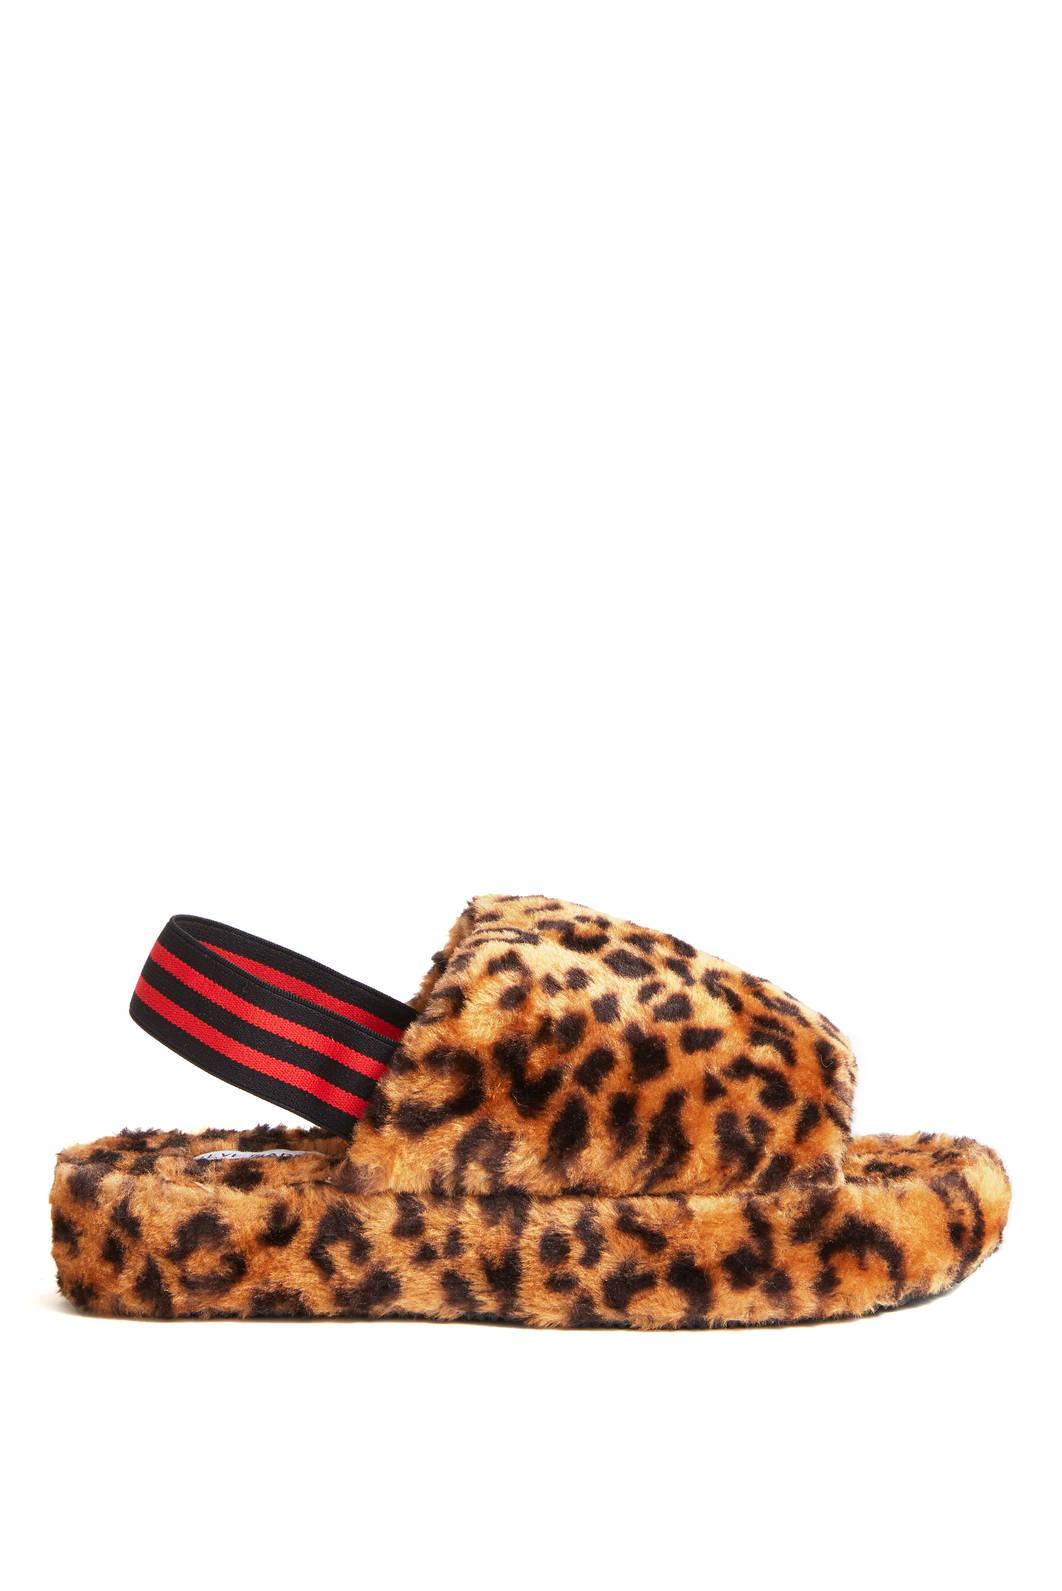 Steve Madden Leopard Slippers Flash Sales, 54% OFF | www.bculinarylab.com